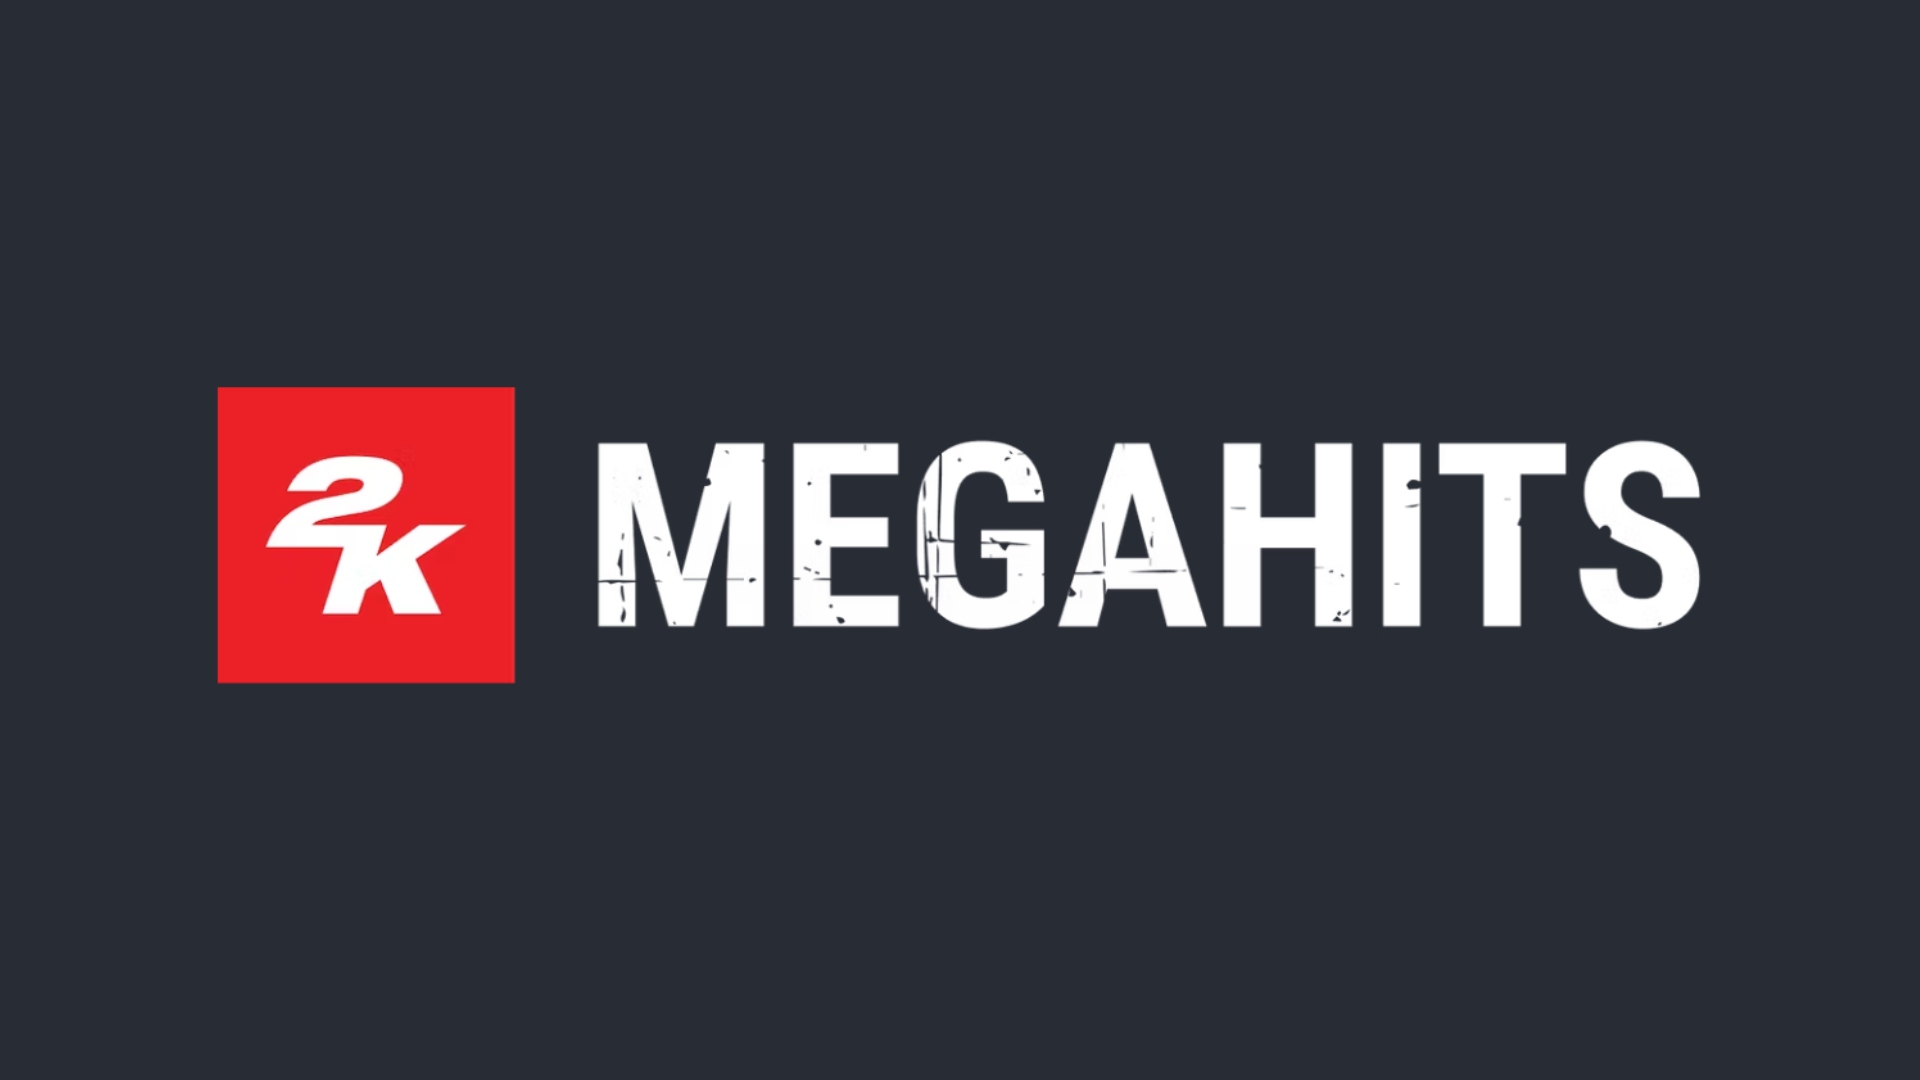 2K Megahits Humble Bundle logo.